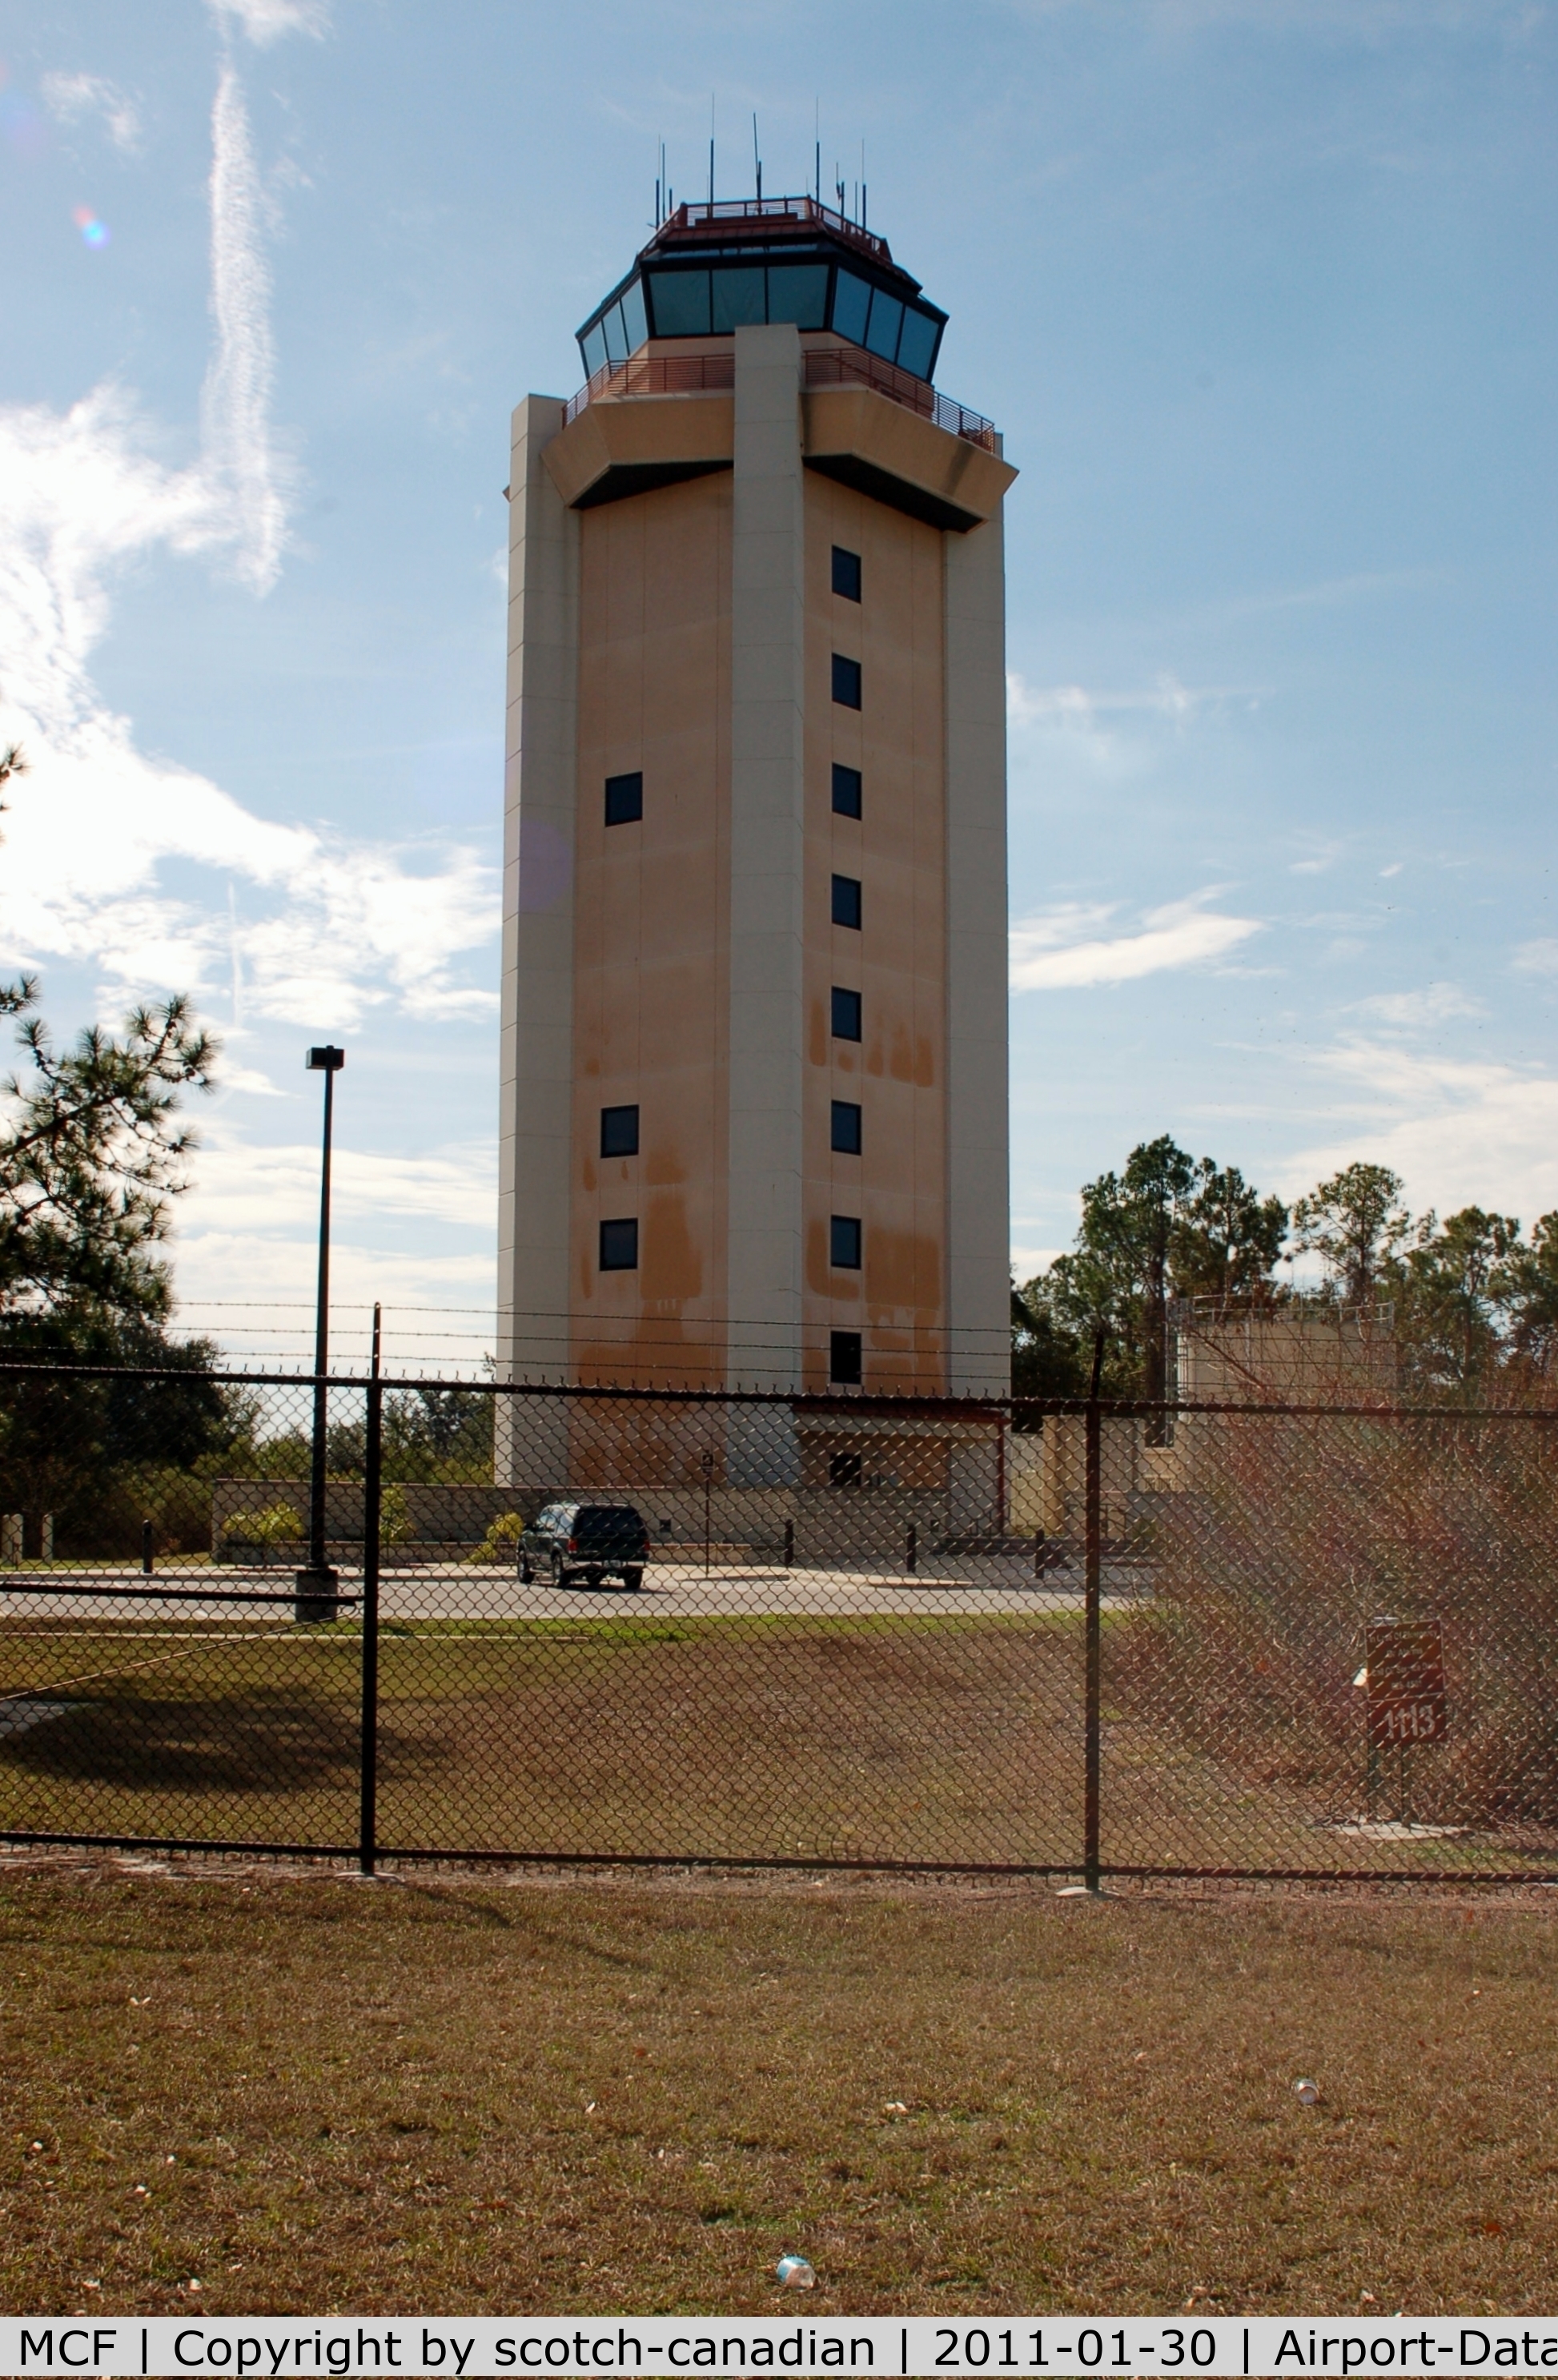 Mac Dill Afb Airport (MCF) - Control Tower at MacDill Air Force Base, Tampa, FL